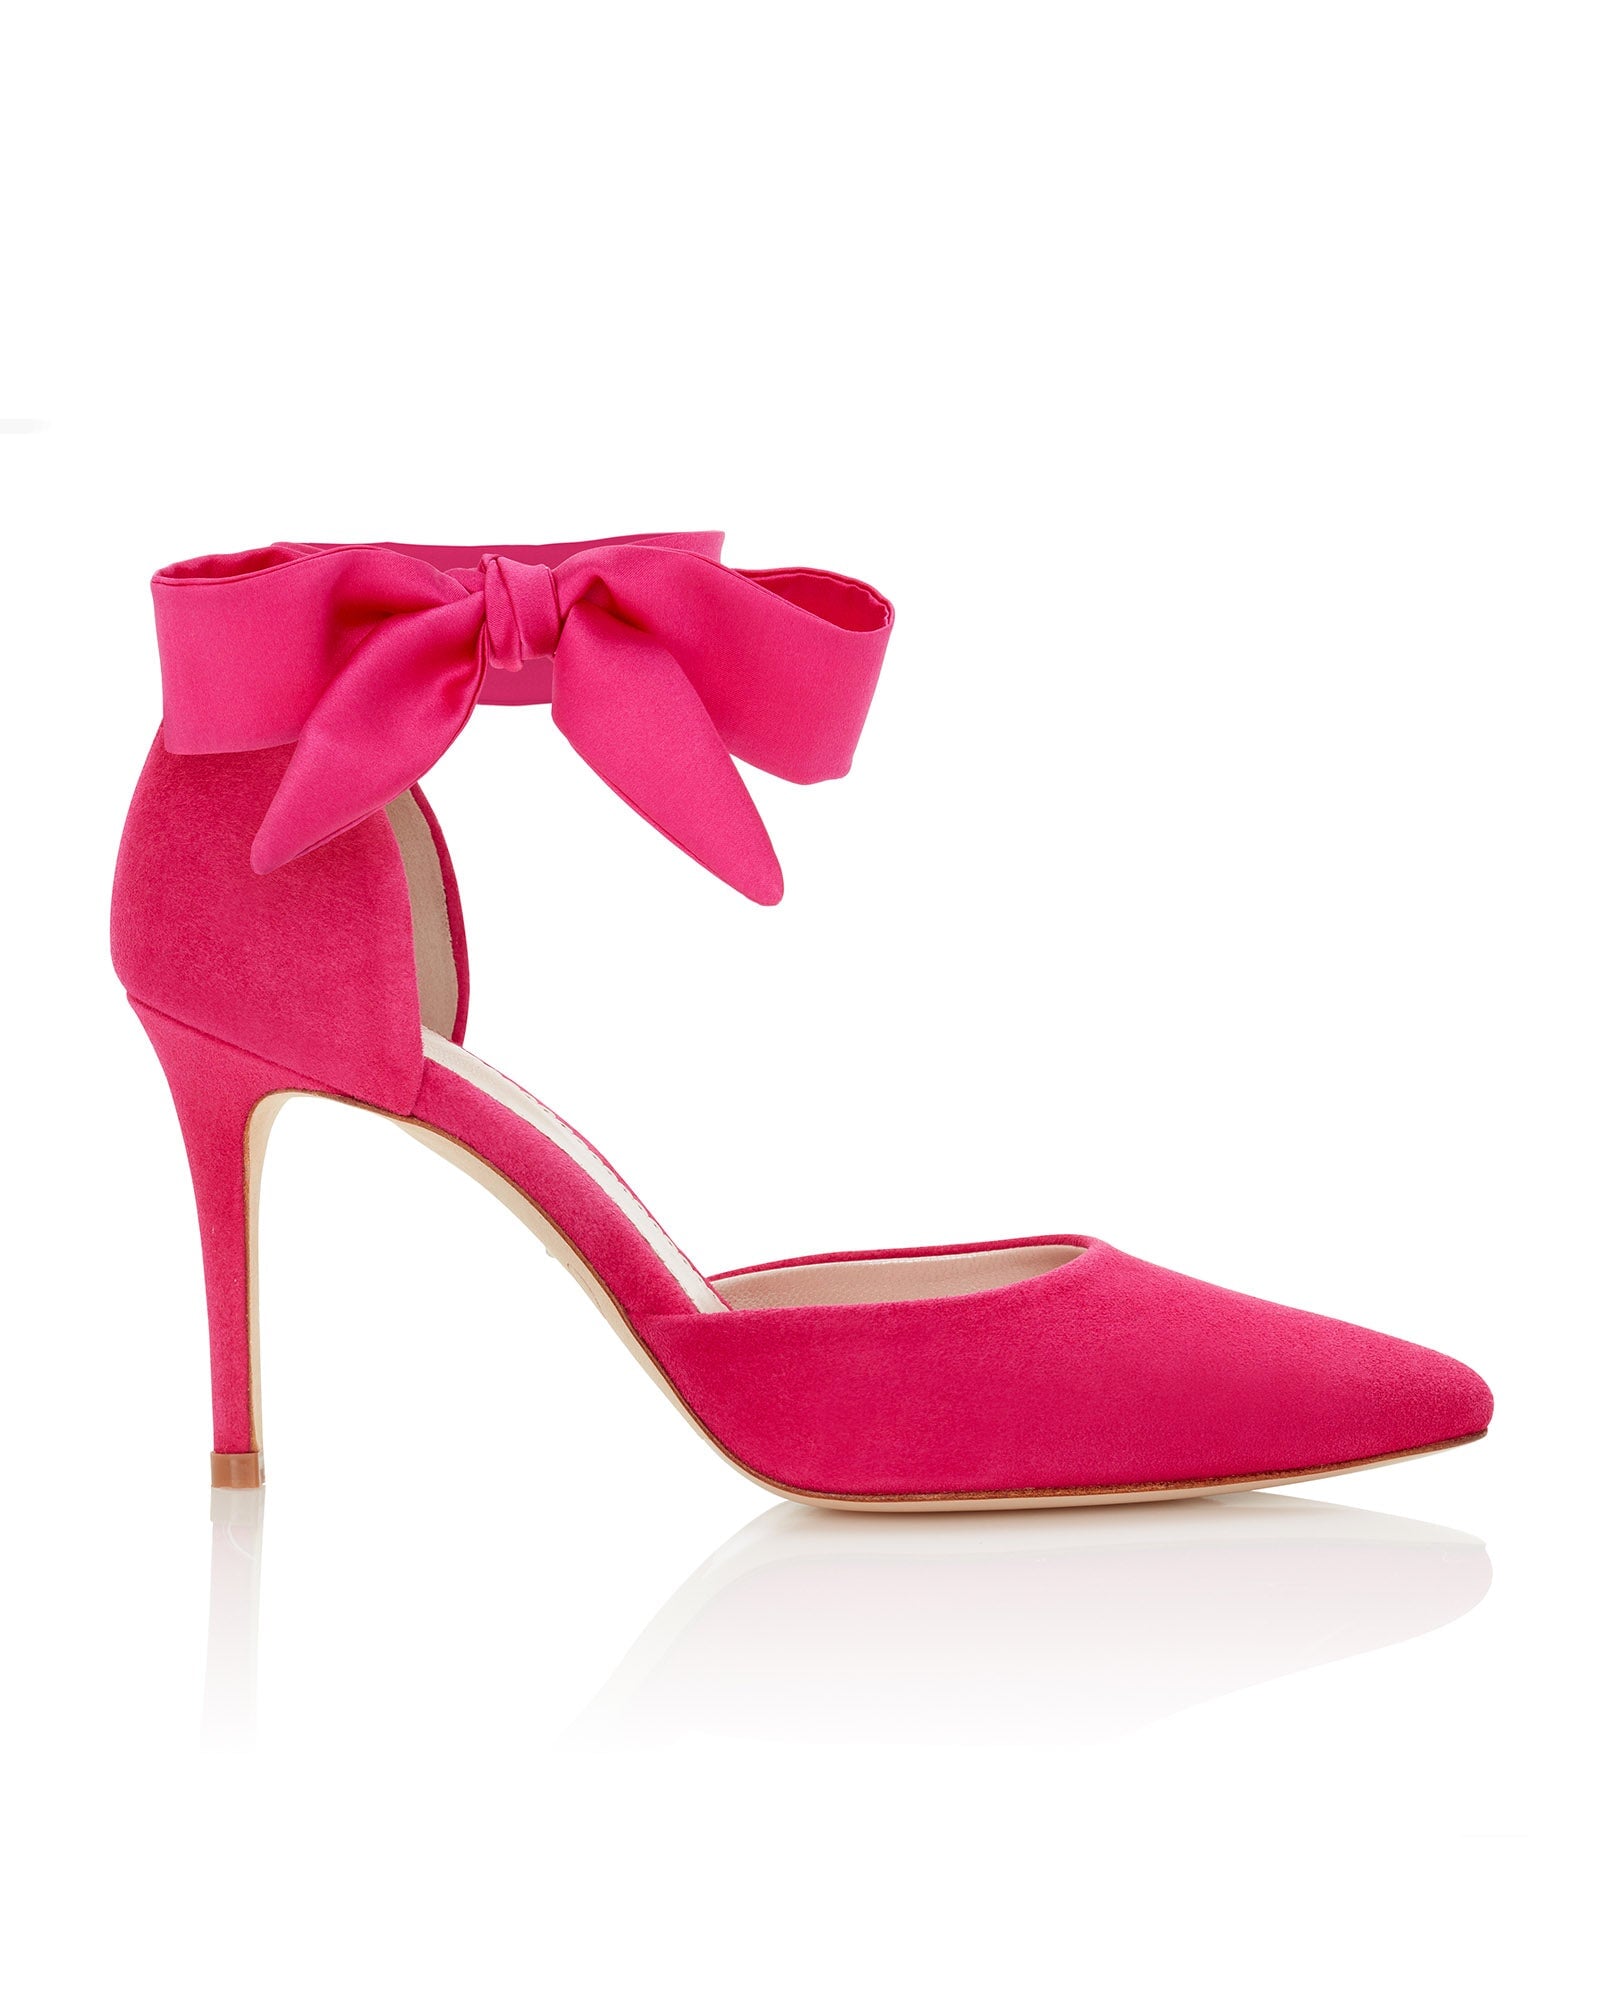 Harriet Mid Heel Fashion Shoe Pink Heels with Ankle Tie Sash  image